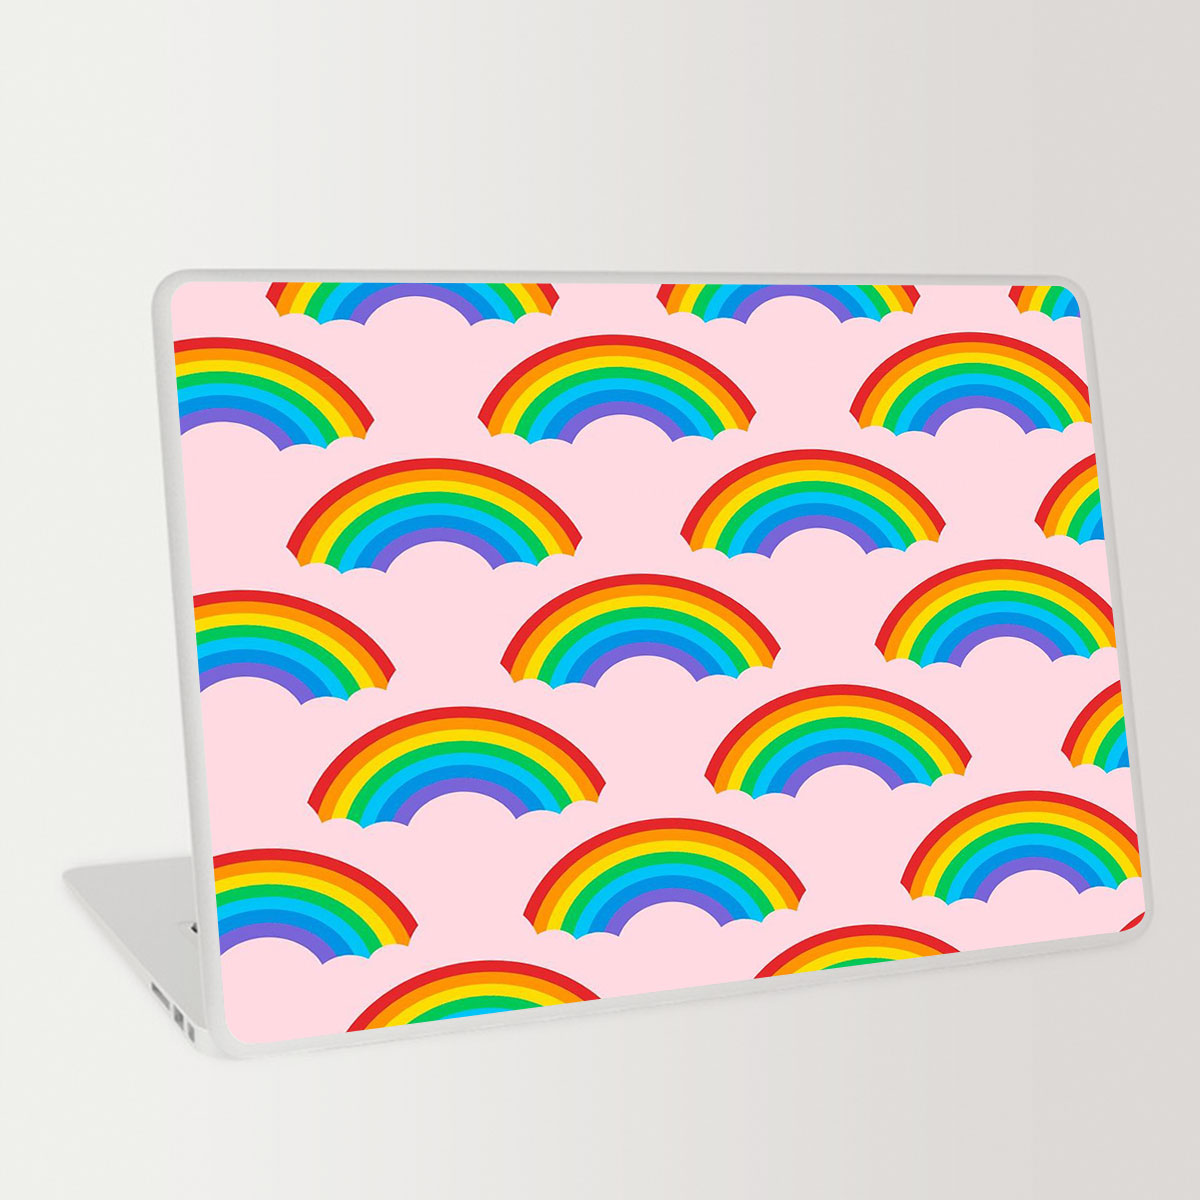 Seamless Rainbow Patterns Laptop Skin